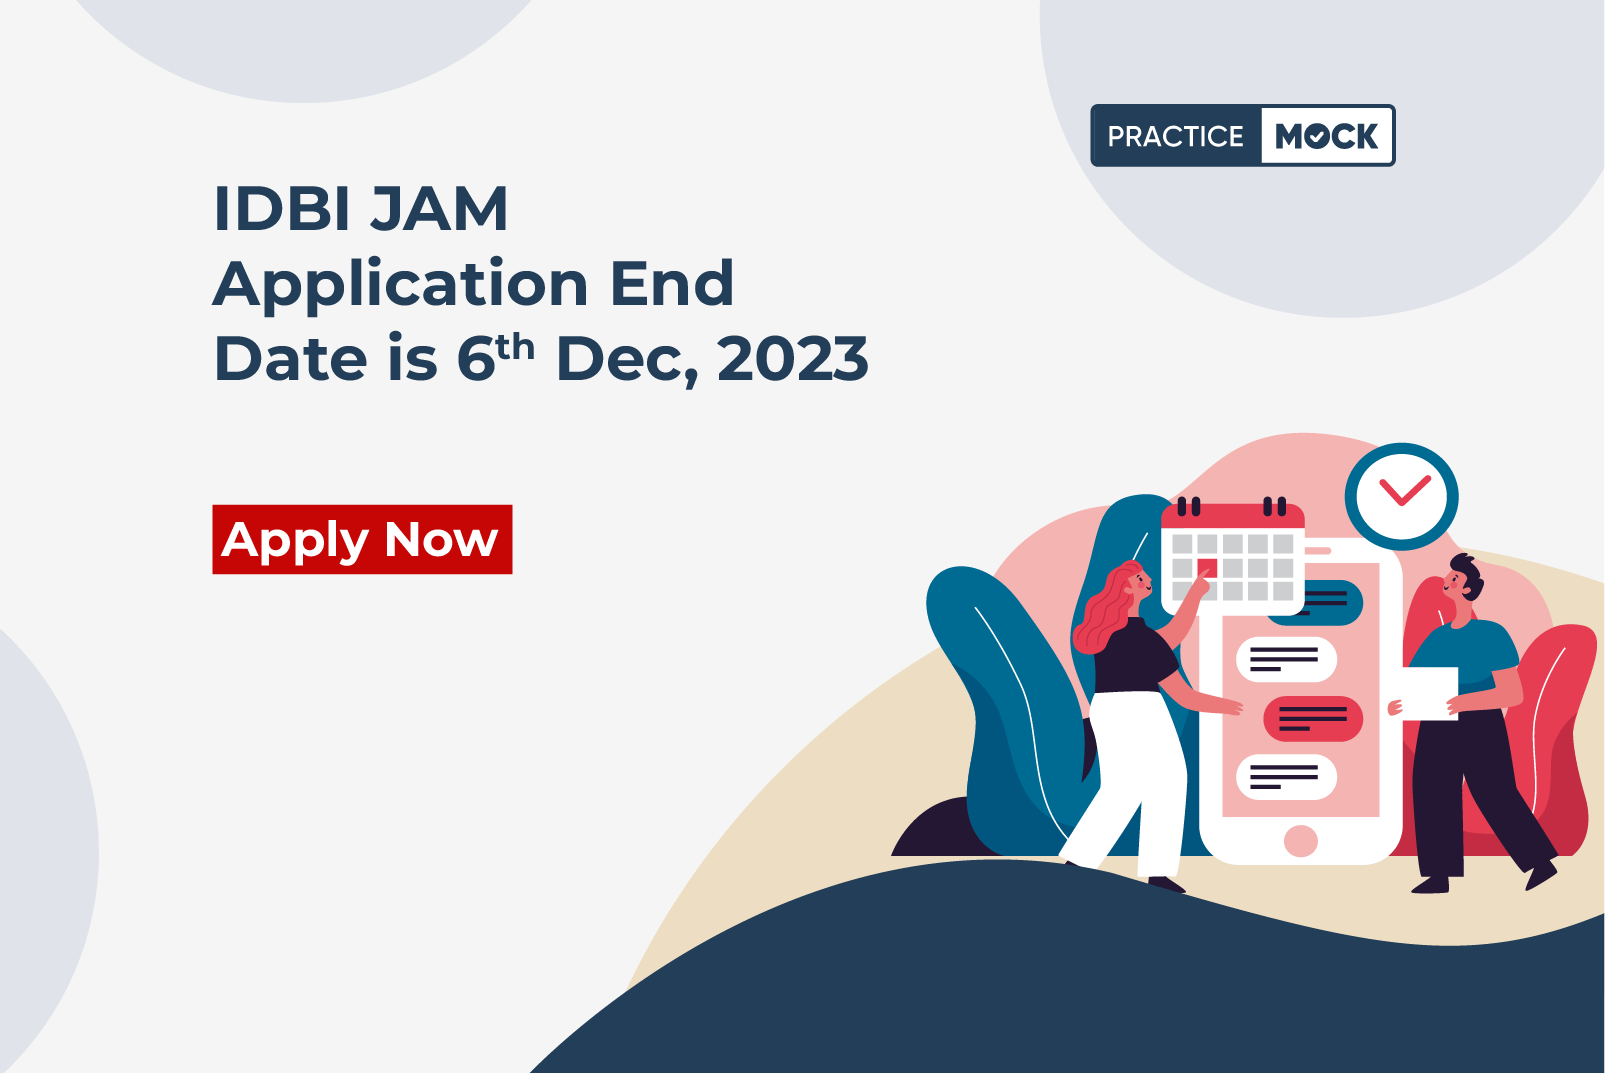 IDBI JAM Application End Date is 6th Dec, 2023